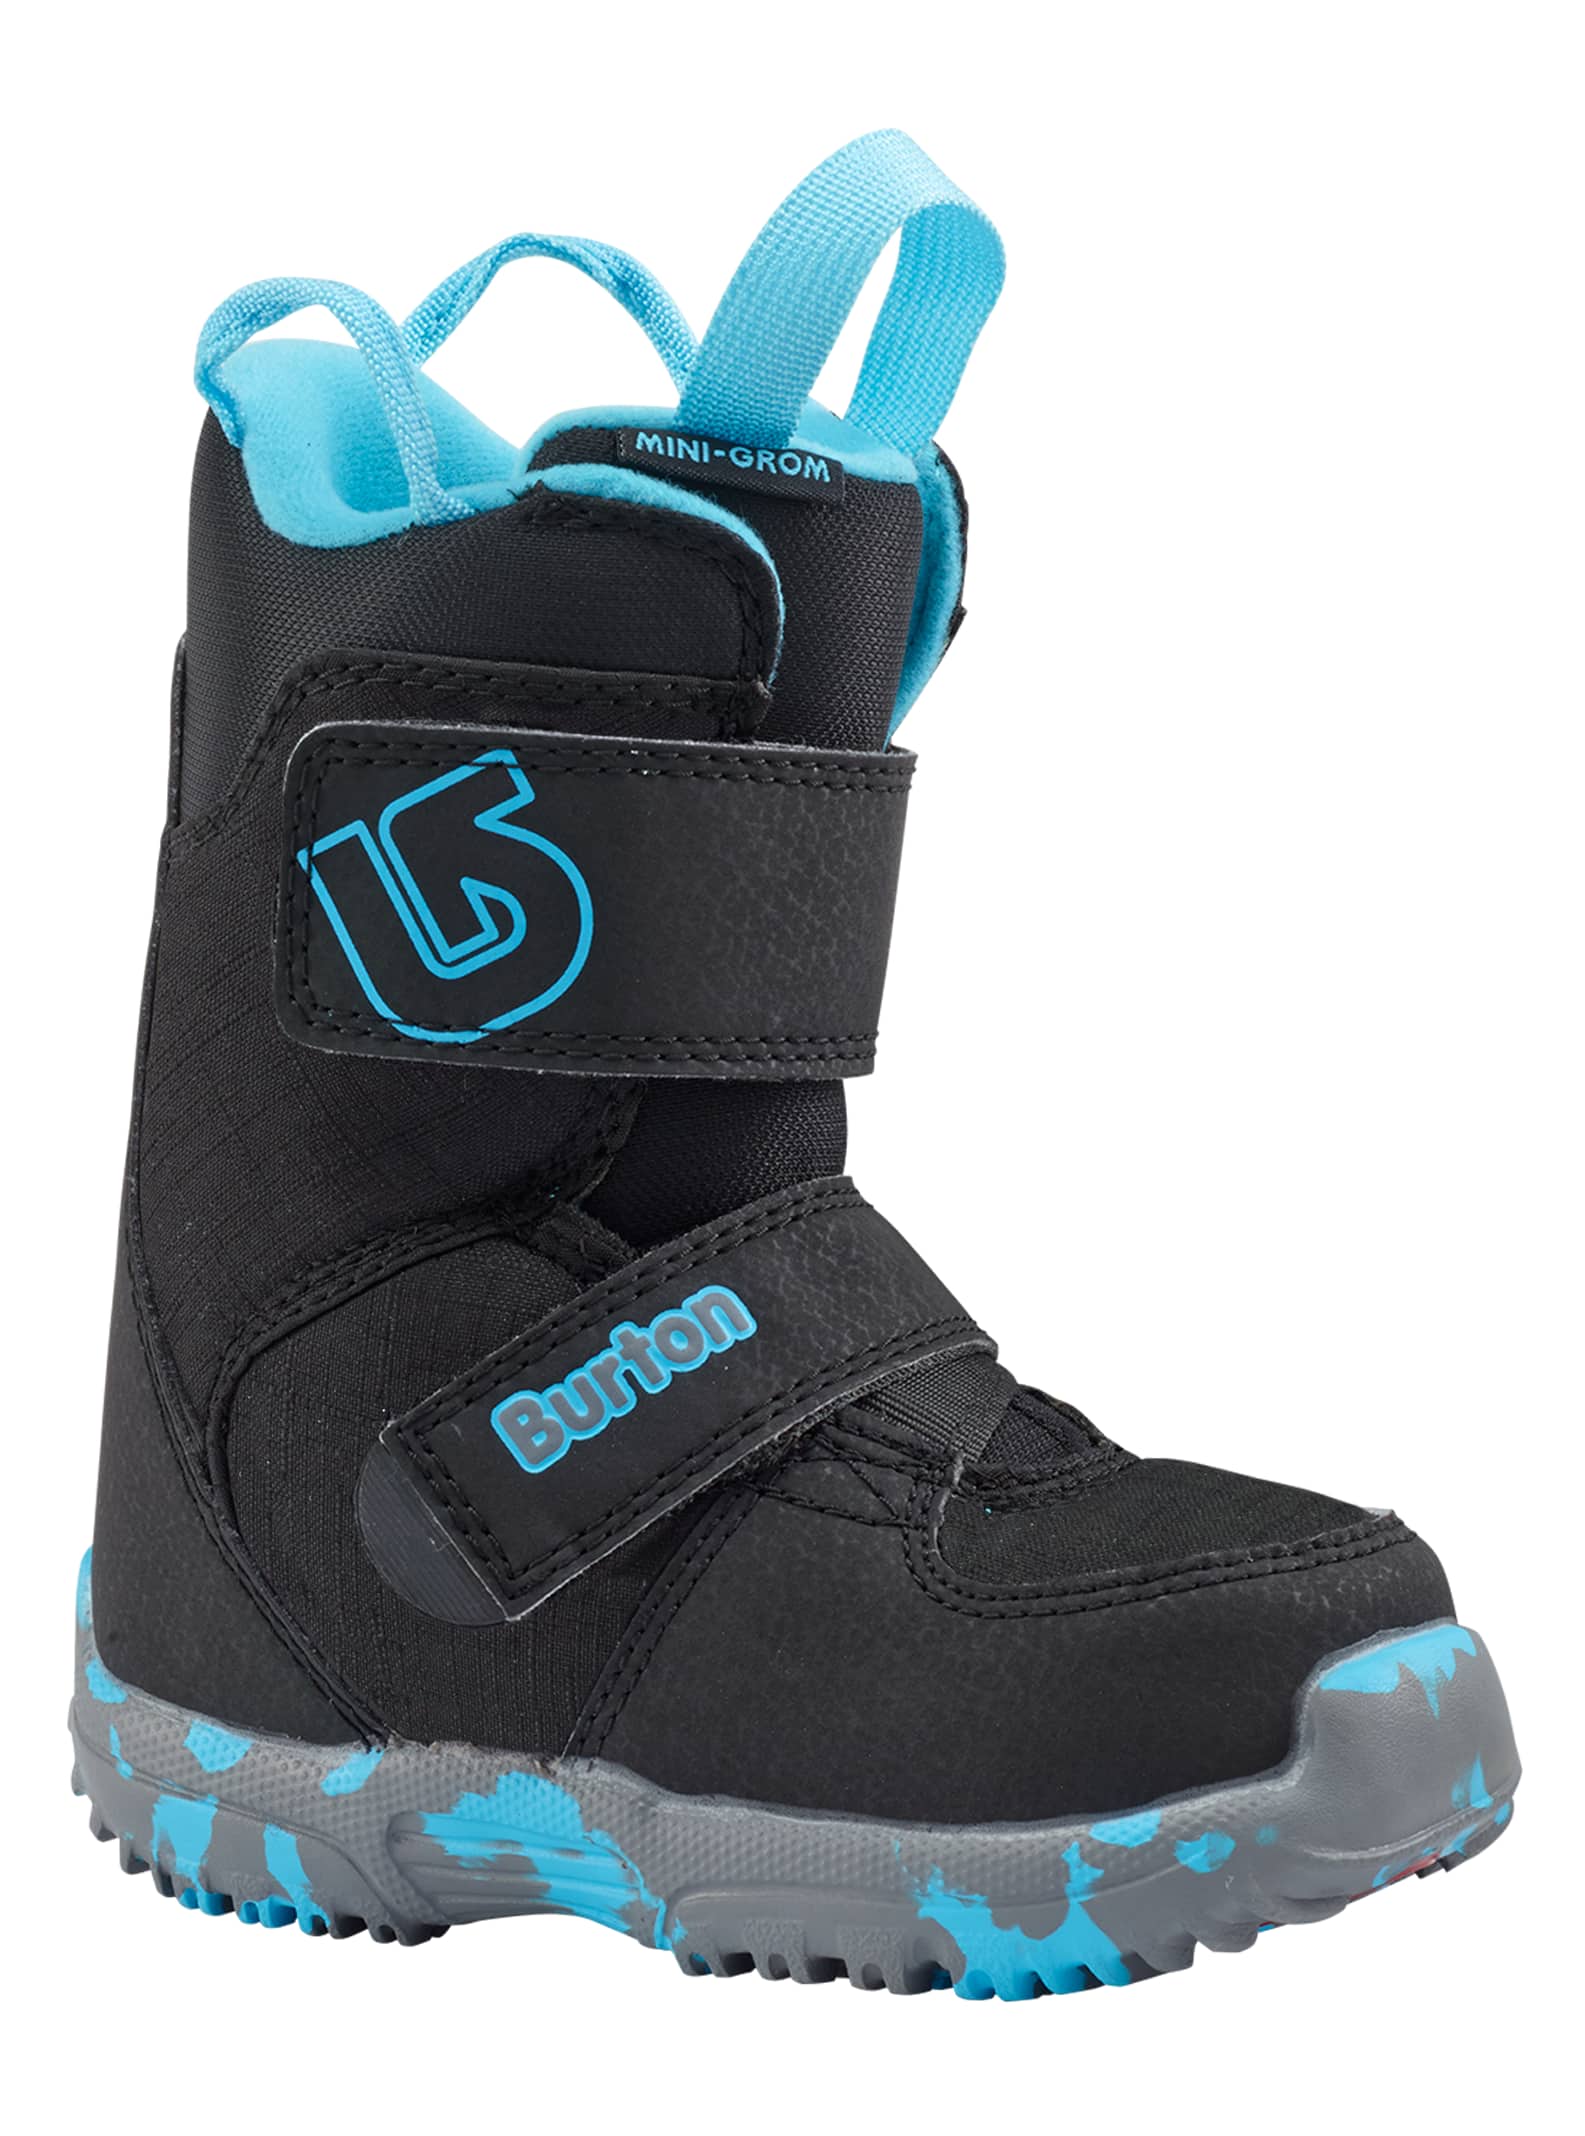 Burton - Boots de snowboard Mini-Grom tout-petit, Black, 10C